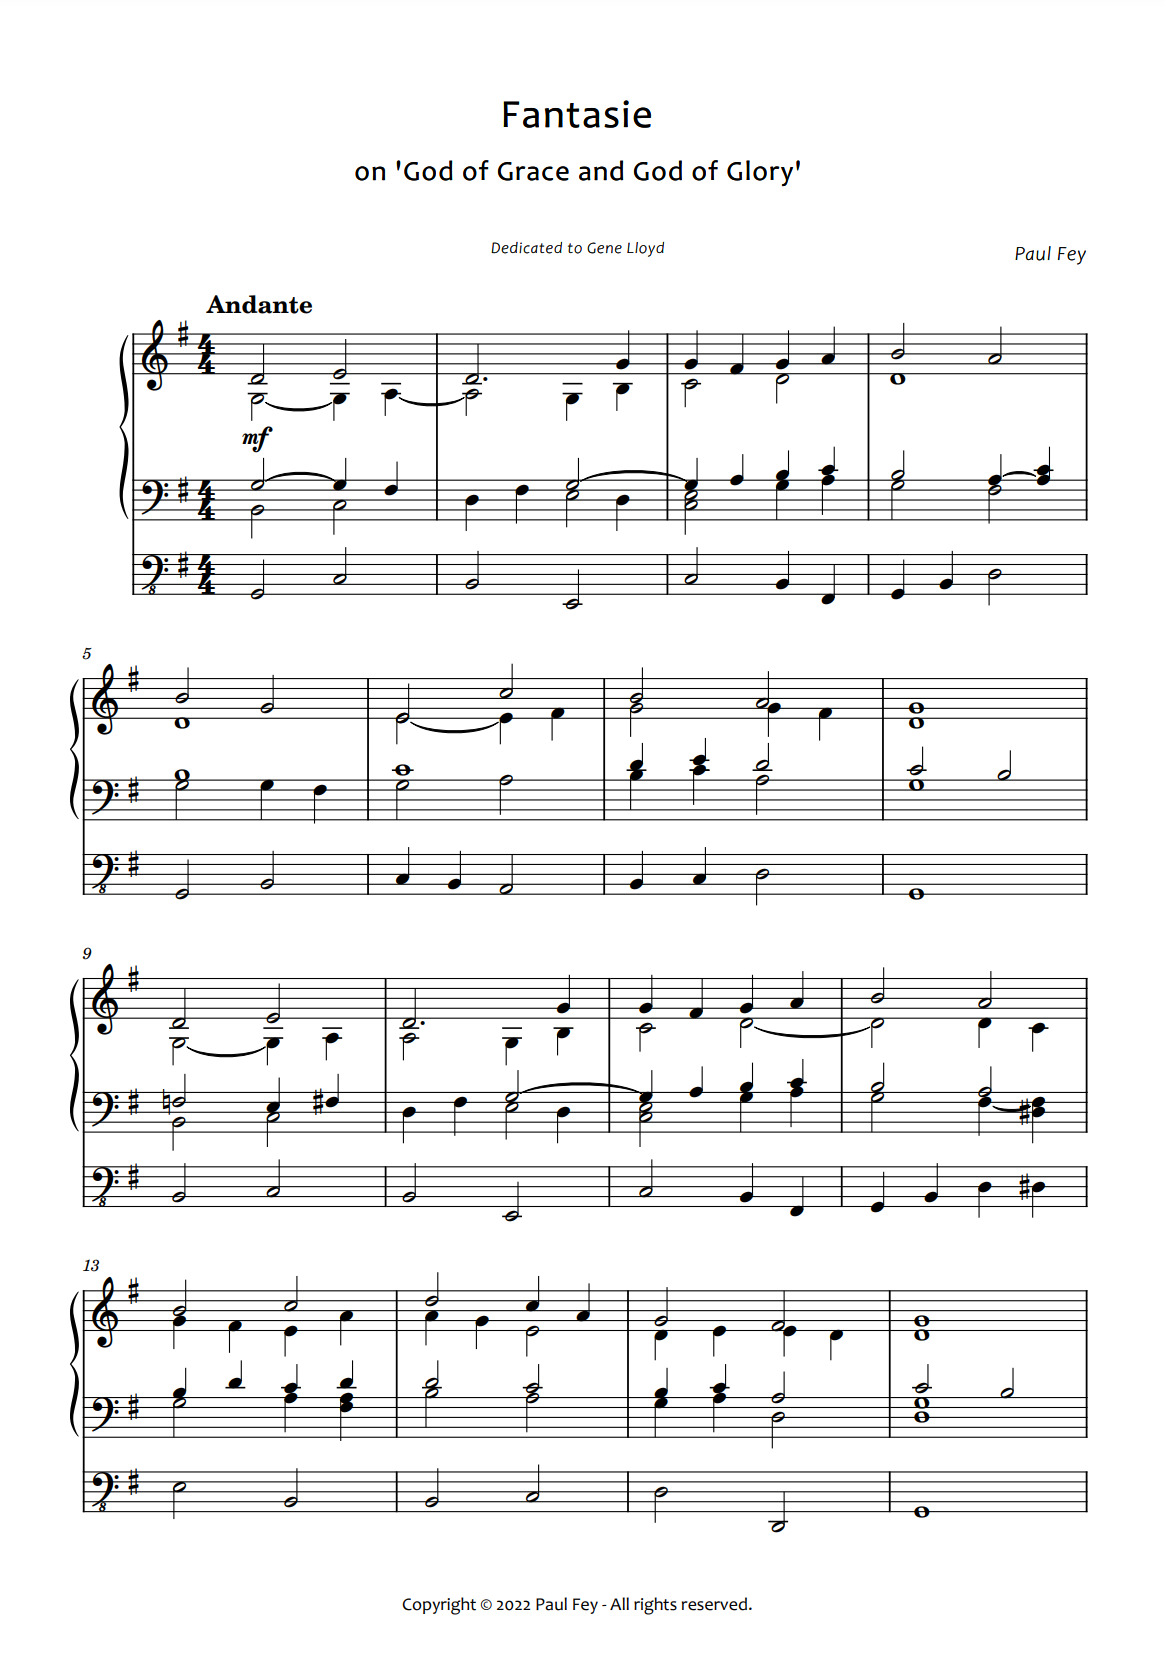 Fantasie on "God of Grace" / "Cwm Rhondda" for Organ (Sheet Music) - Music for Pipe Organ by Paul Fey